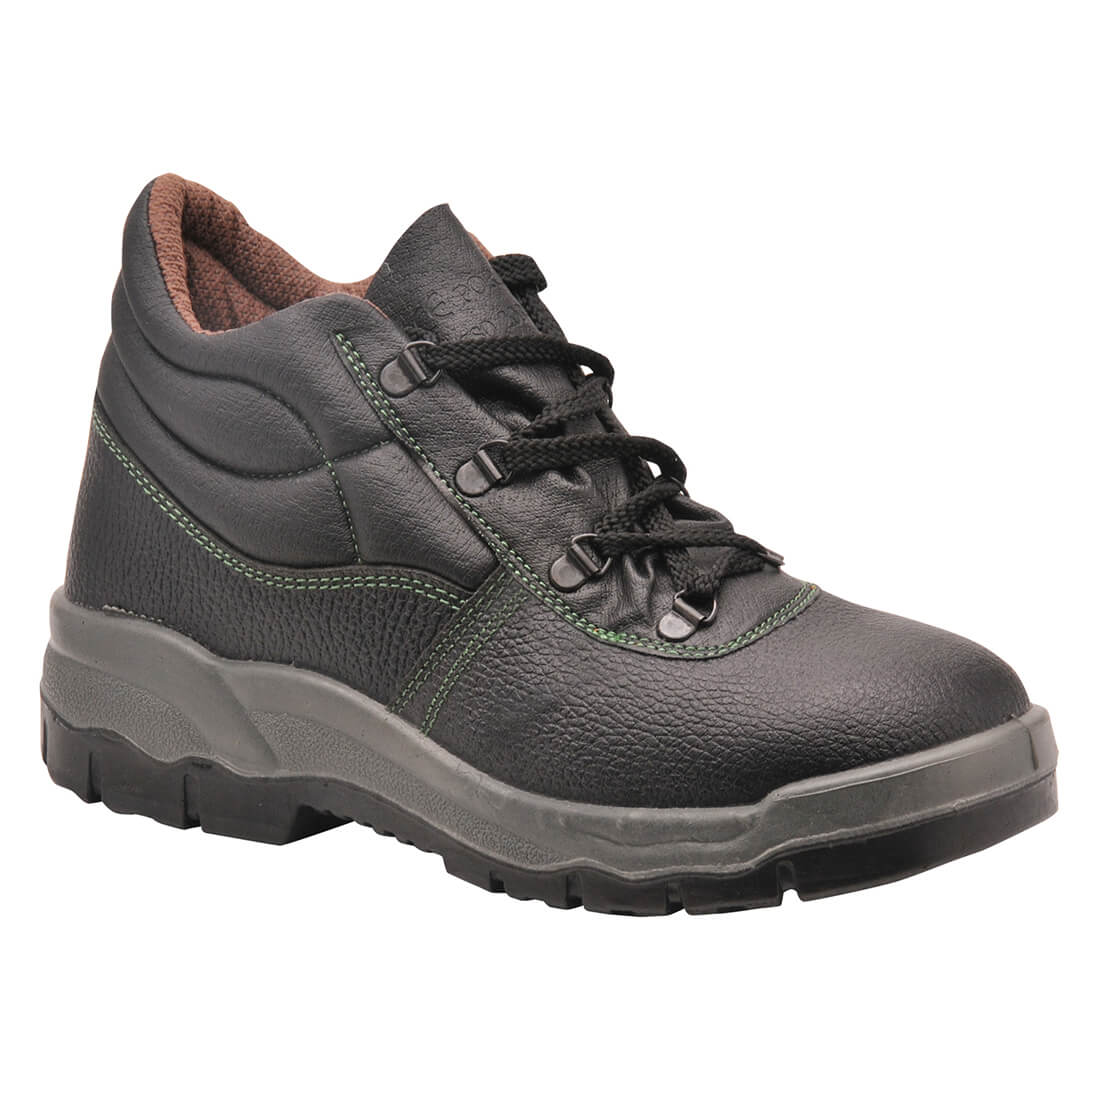 Portwest Steelite Steel Toe Cap Safety Boots Black Size 5